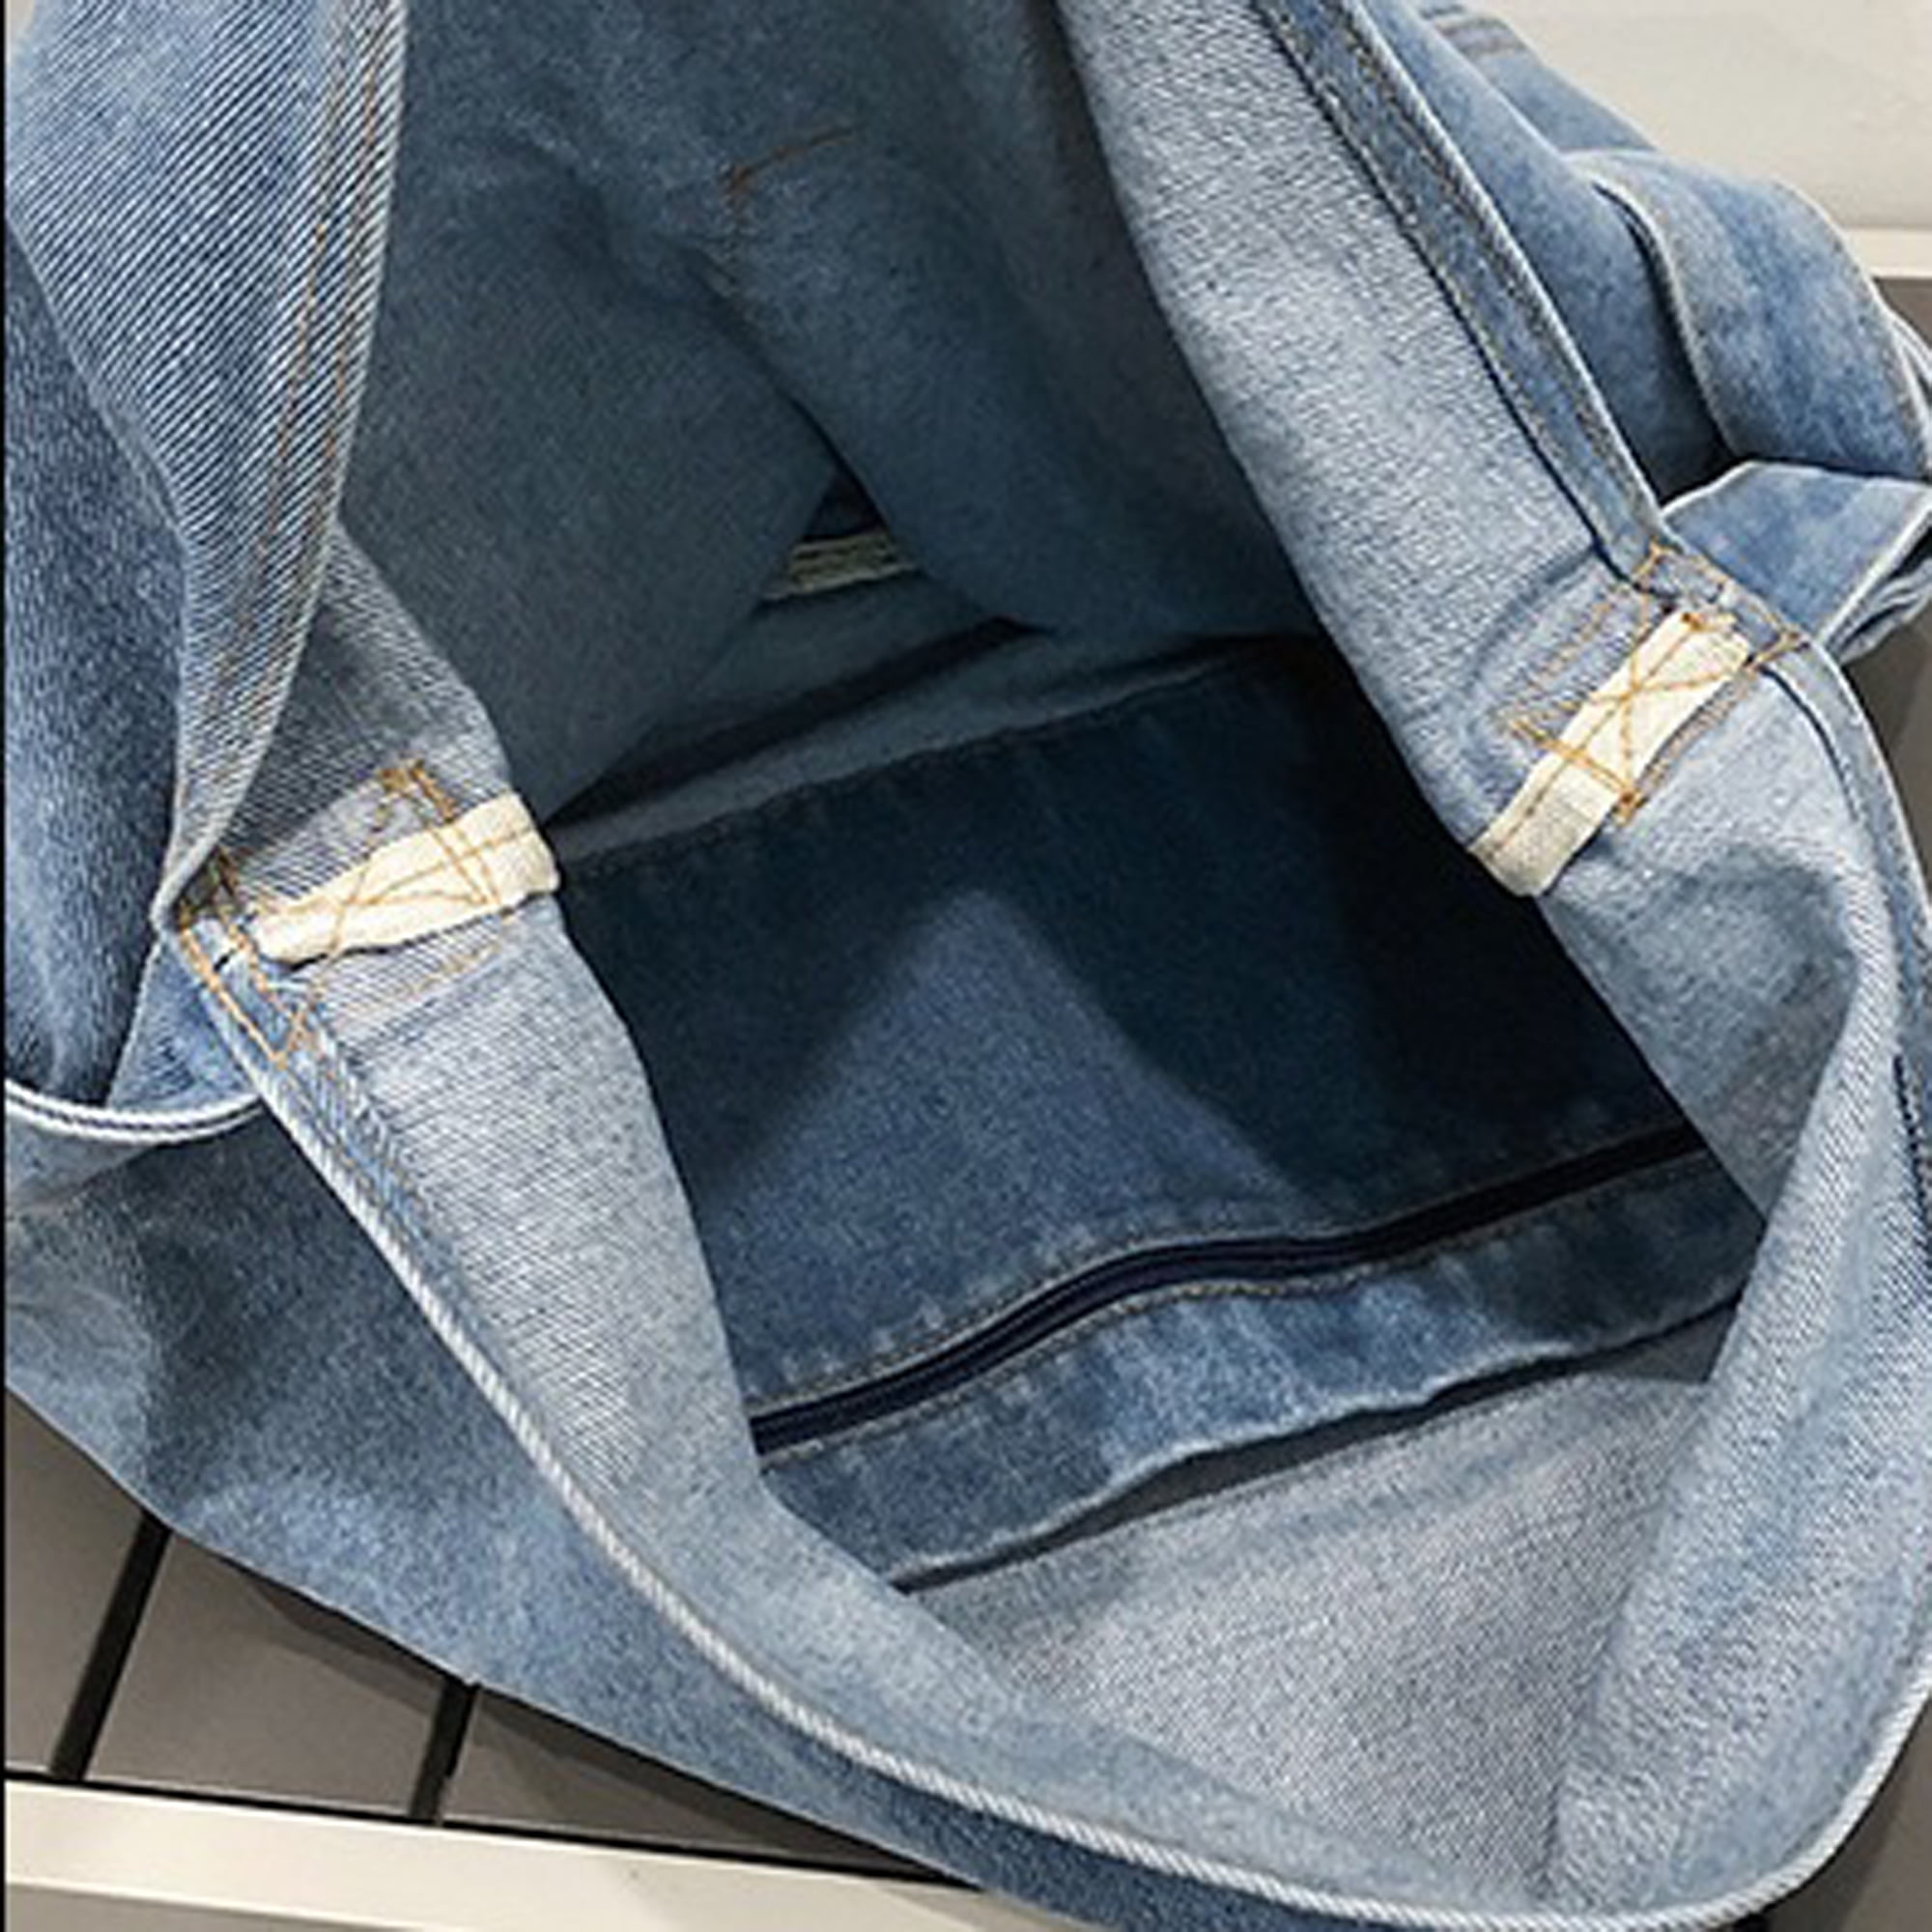 Ichic Boutique Womens Denim Crossbody Bags Purse Blue Jeans Shopper  Shoulder Bag Bookbag,Dark Blue: Handbags